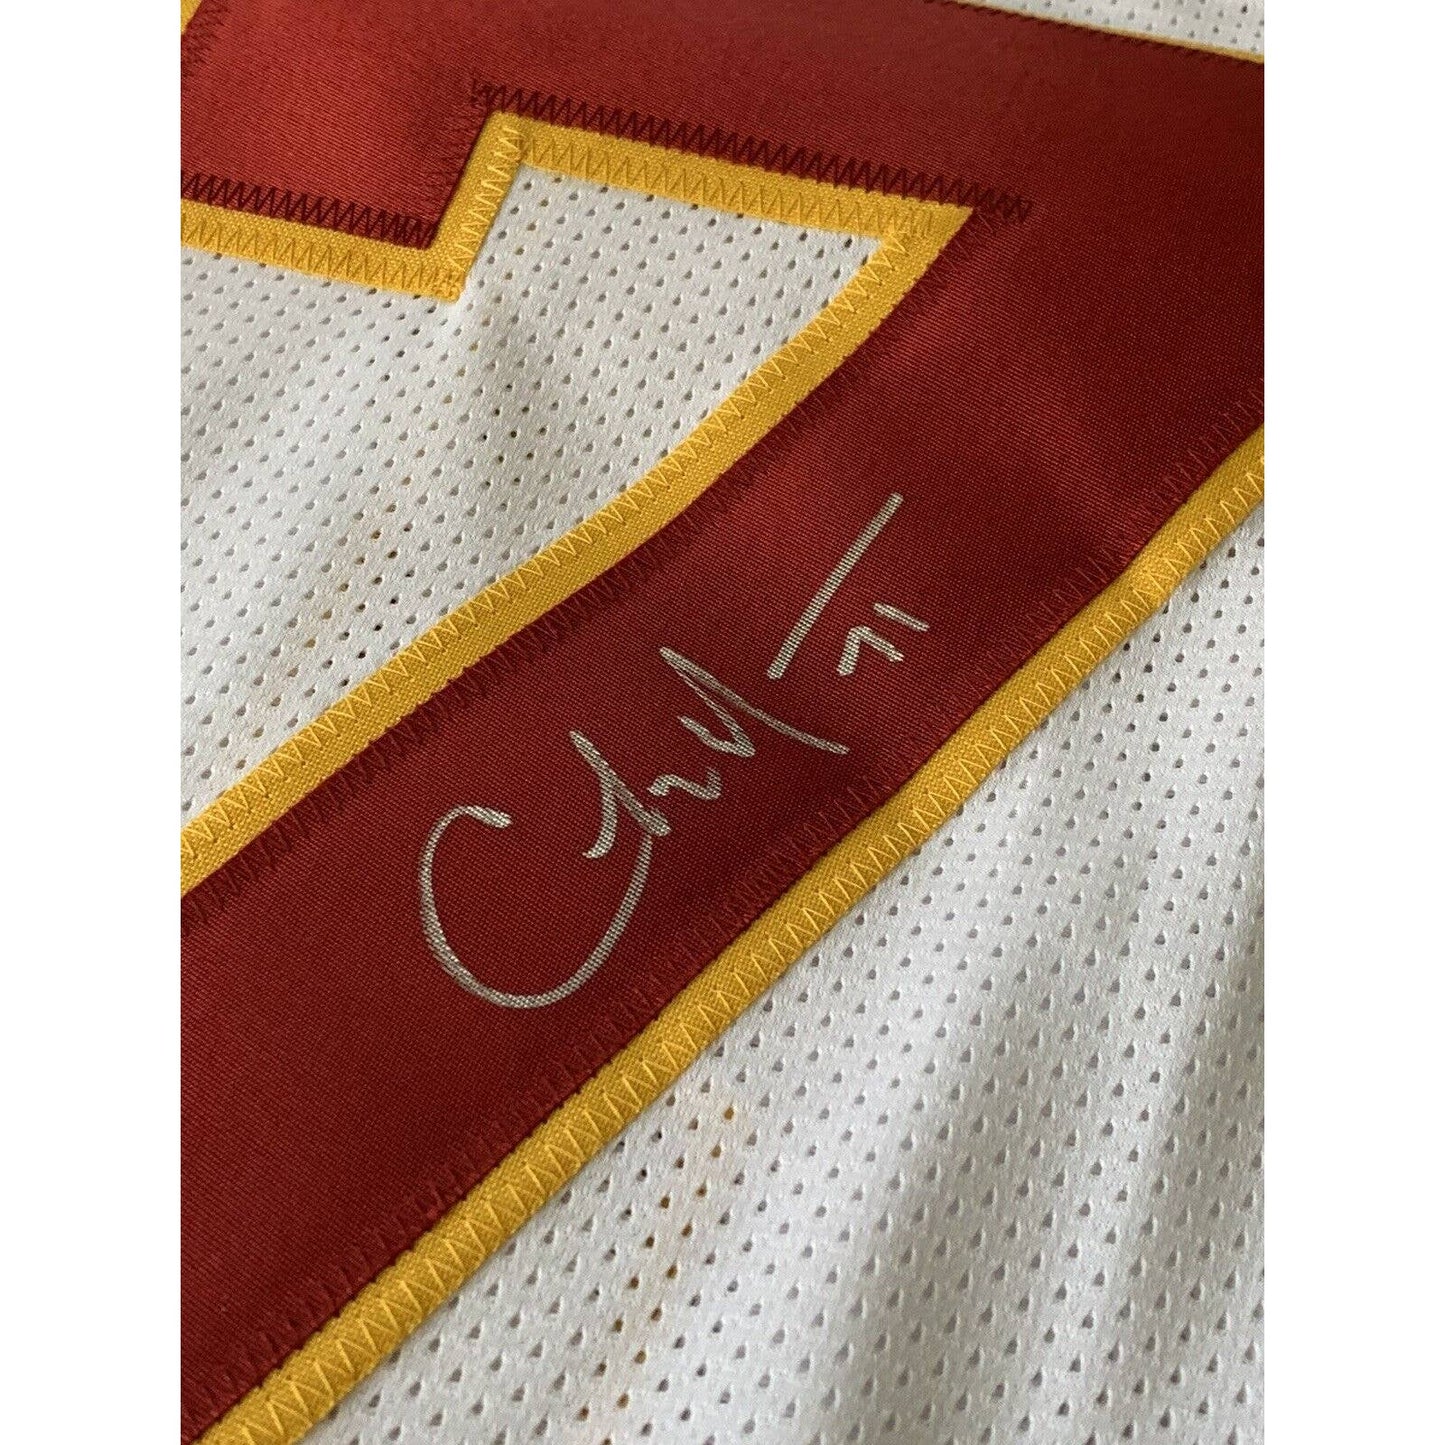 Charles Mann Autographed/Signed Jersey JSA COA Washington Football Team - TreasuresEvolved